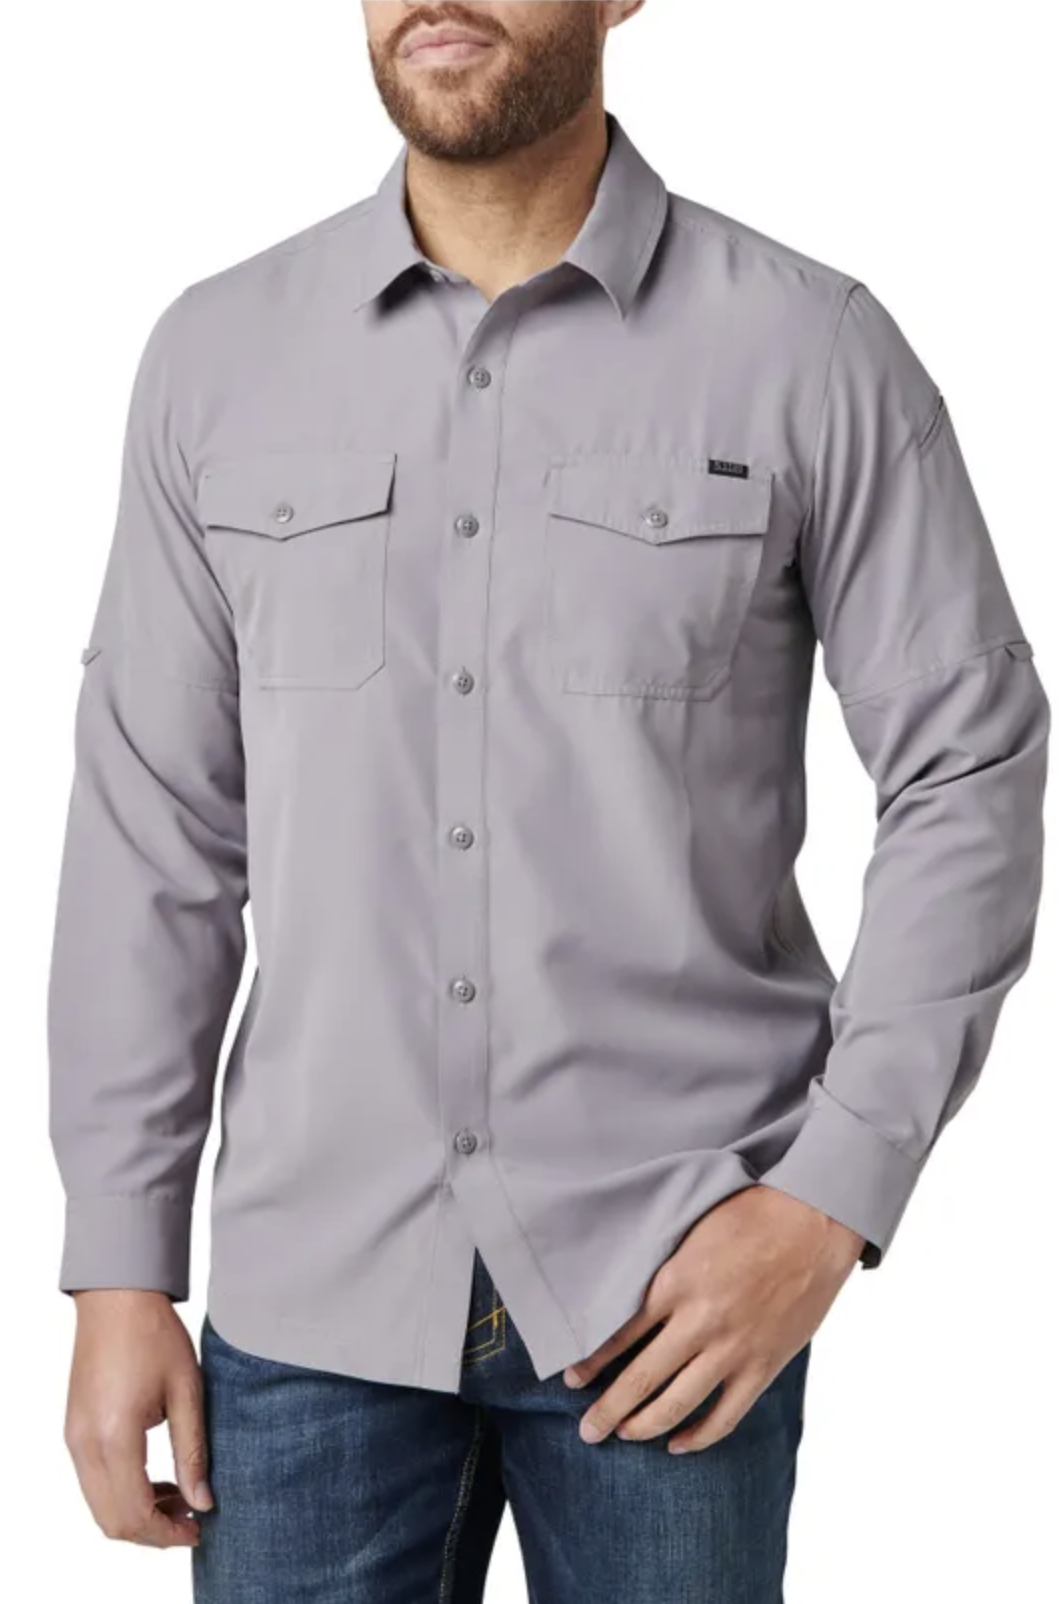 5.11 - Marksman Long Sleeve Shirt UPF 50+ - Overcast Grey (598)